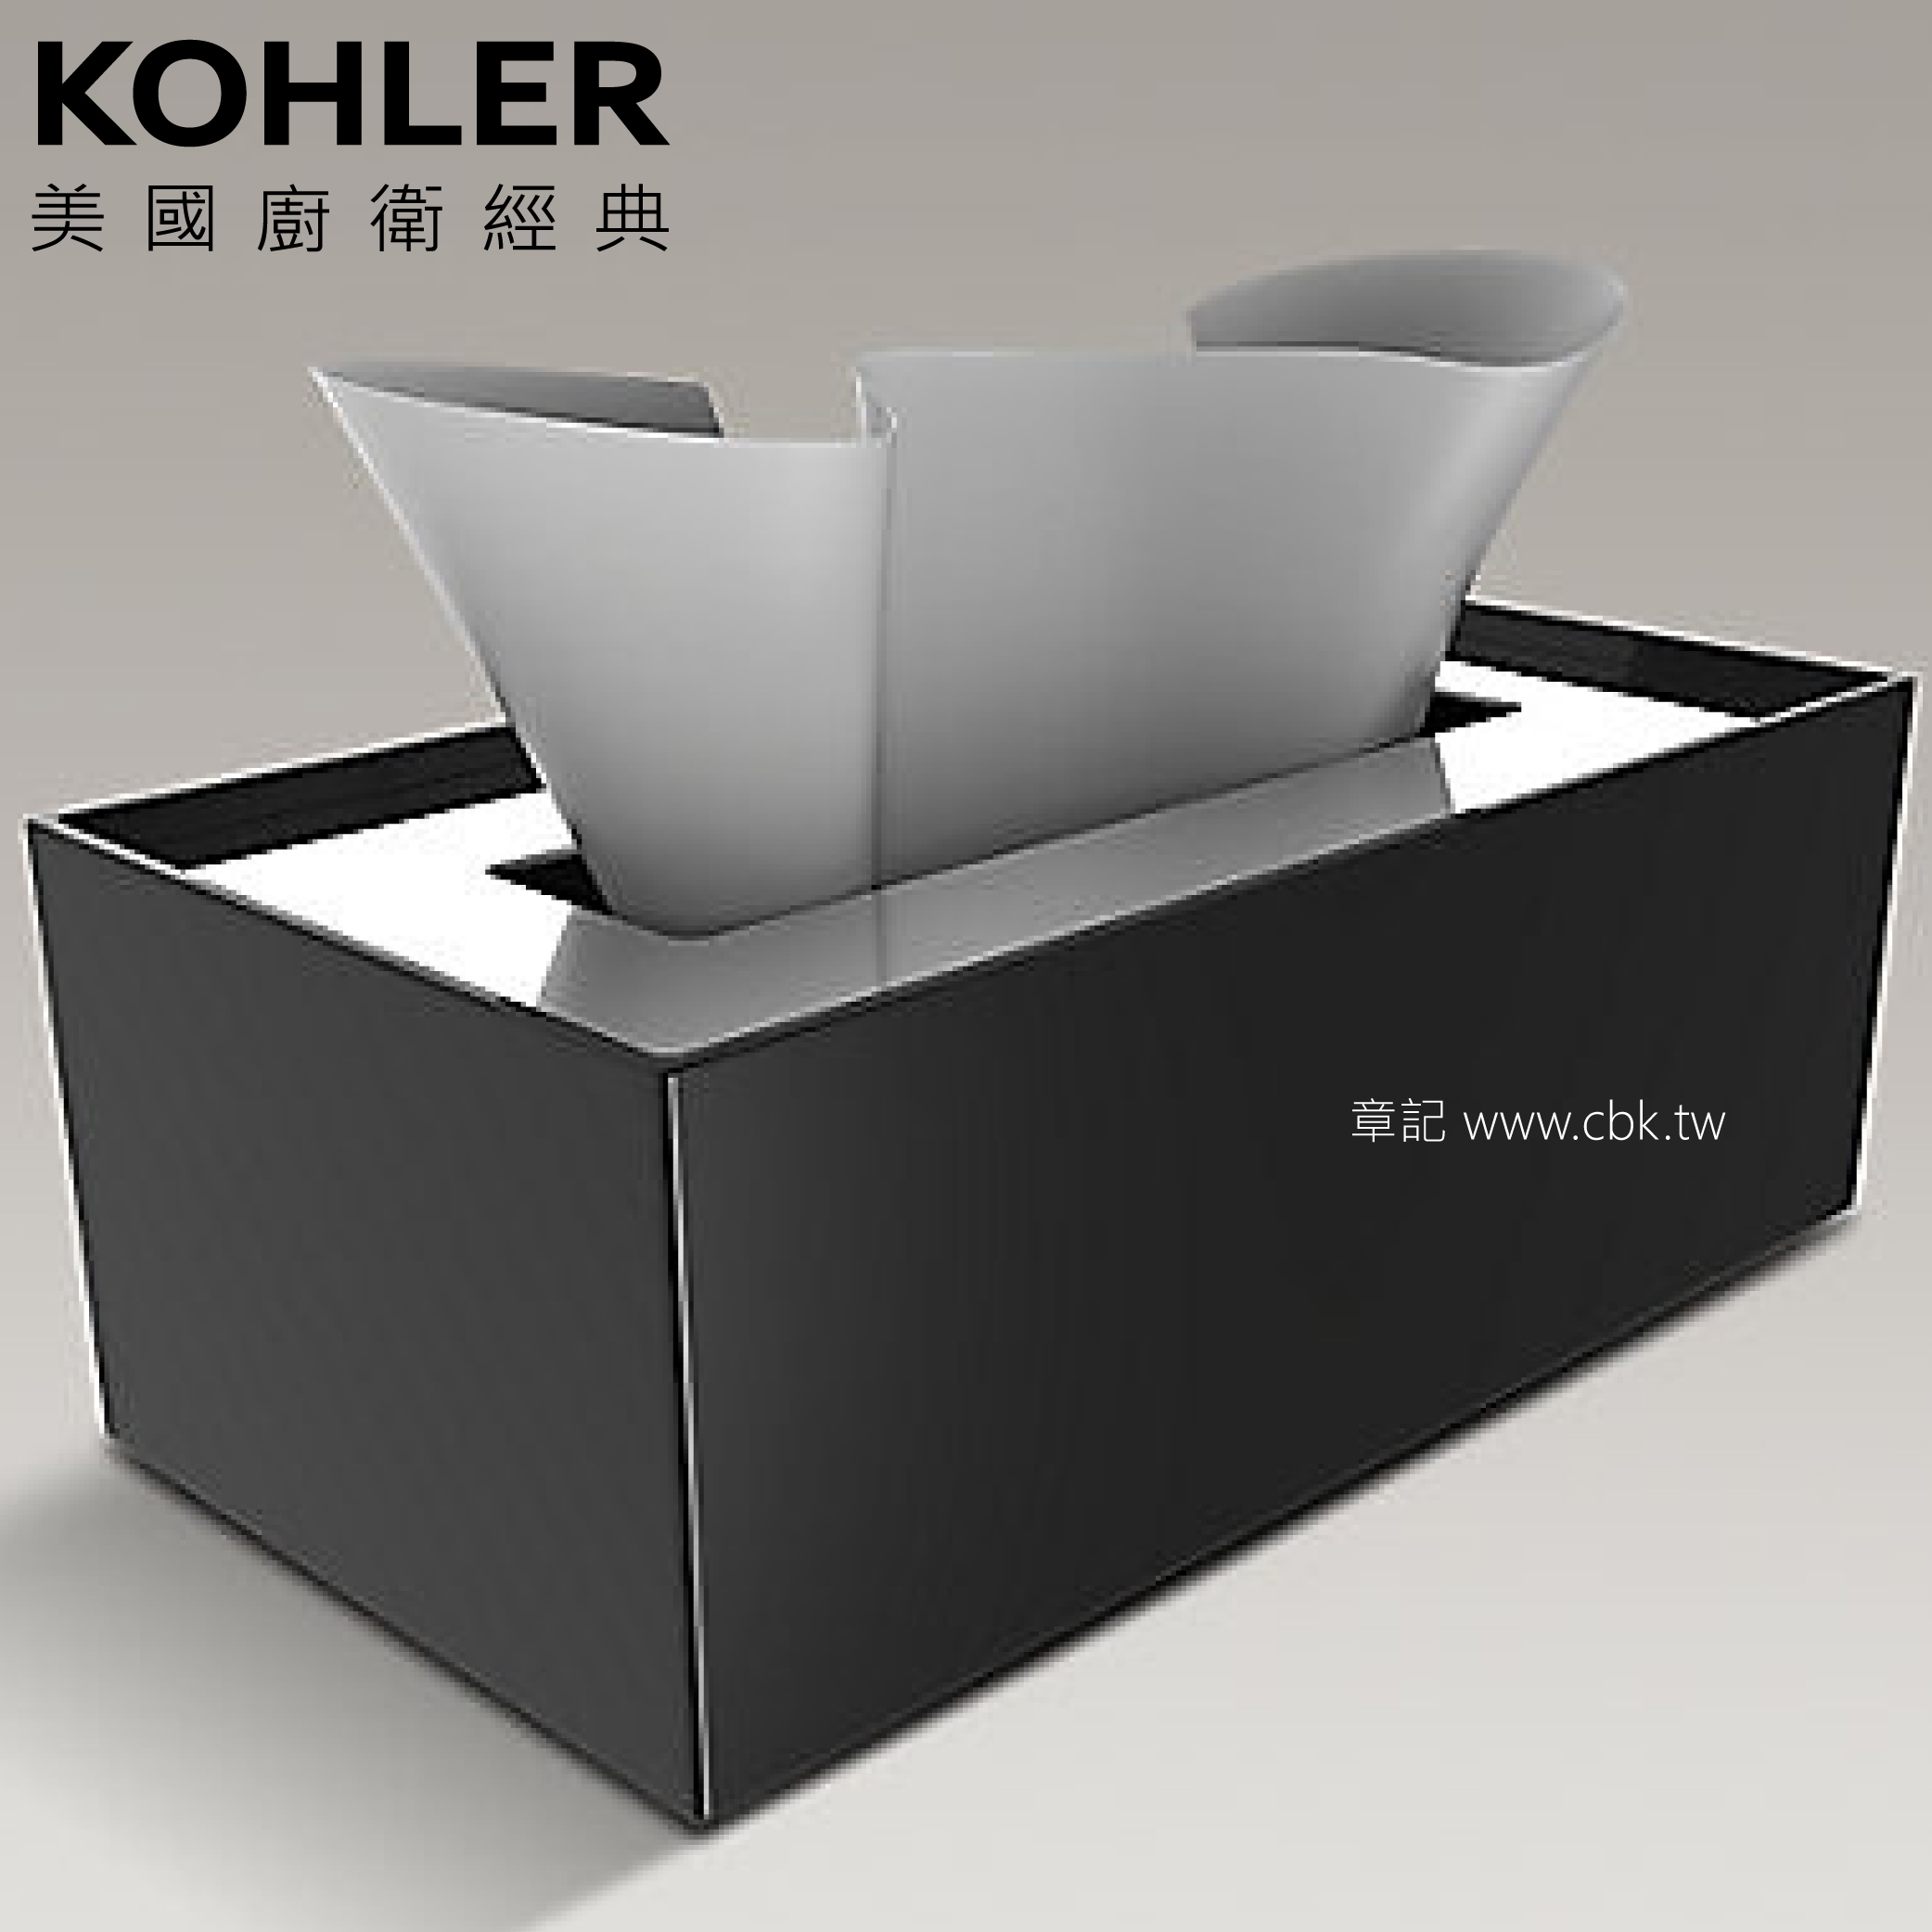 KOHLER Stages 面紙盒 K-27367T-RG7  |浴室配件|衛生紙架